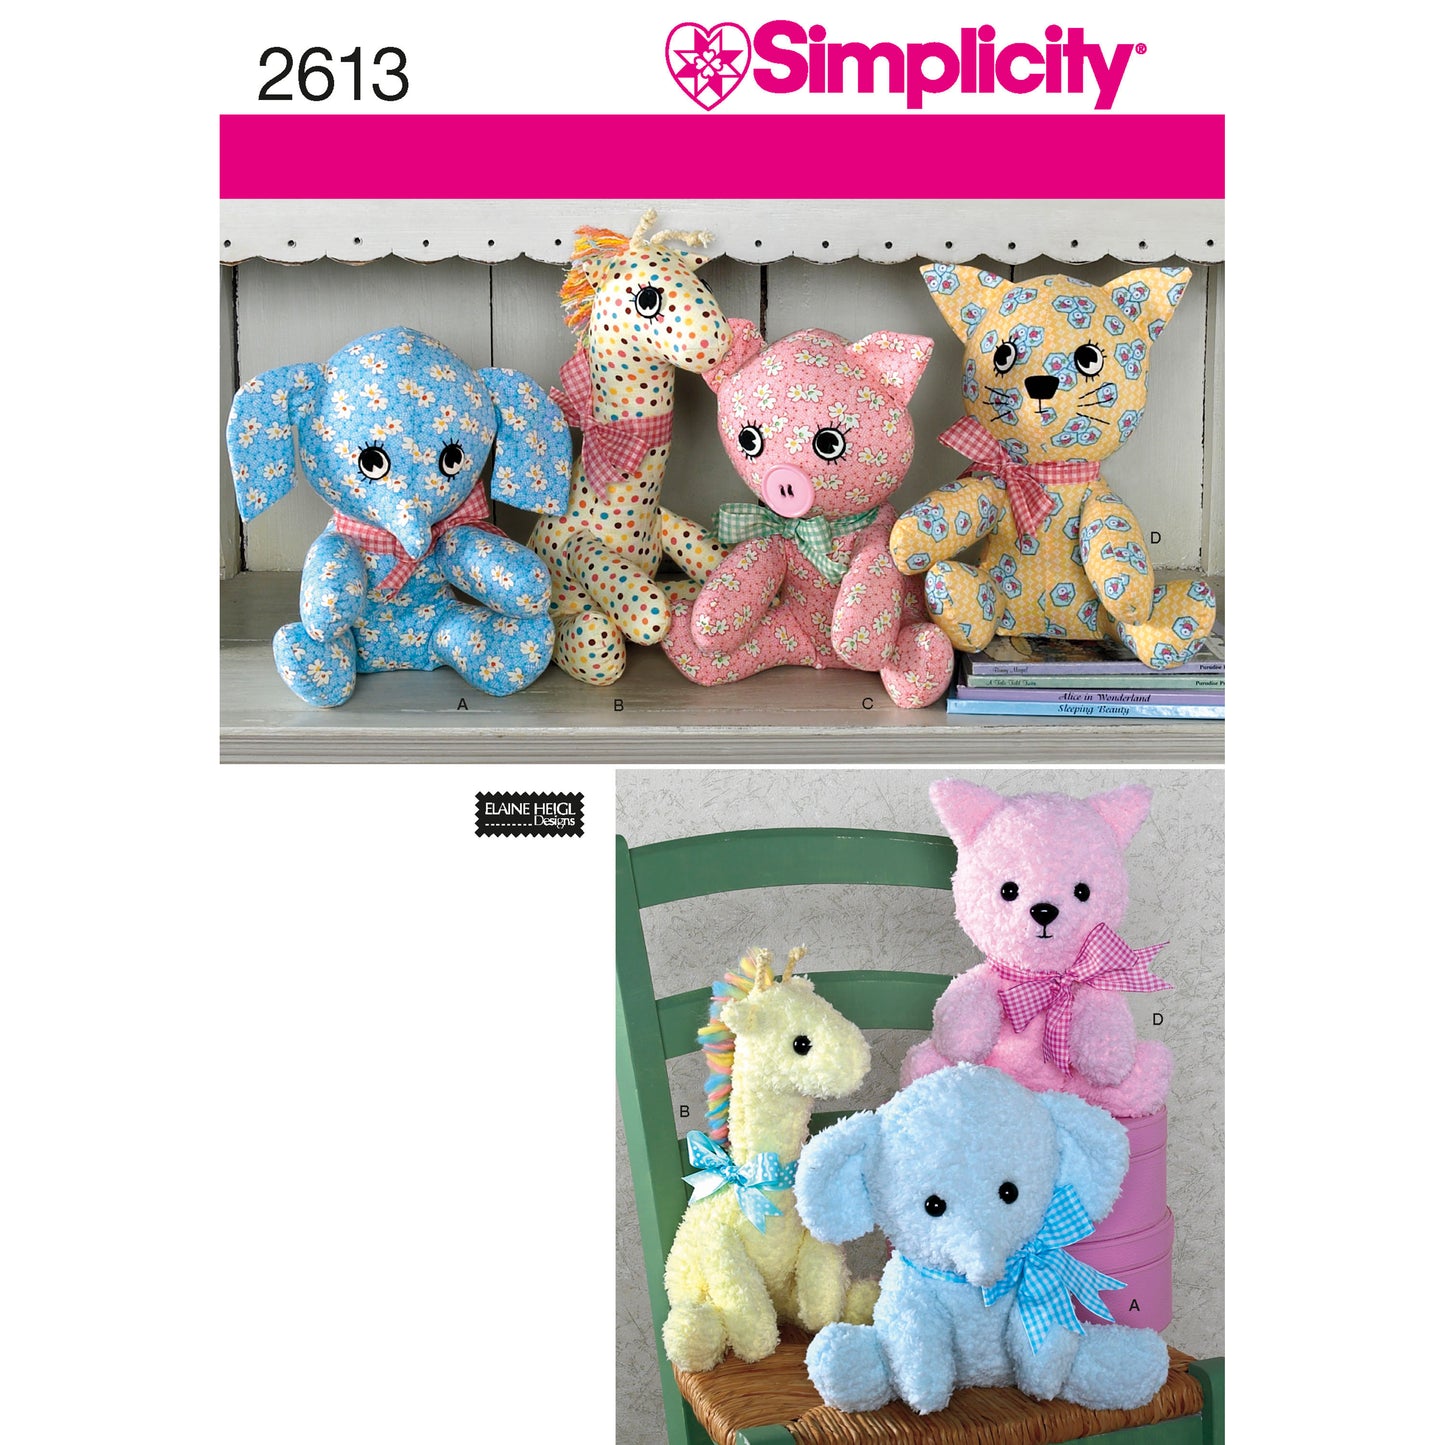 Simplicity 2613 - Crafts: Stuffed Animals